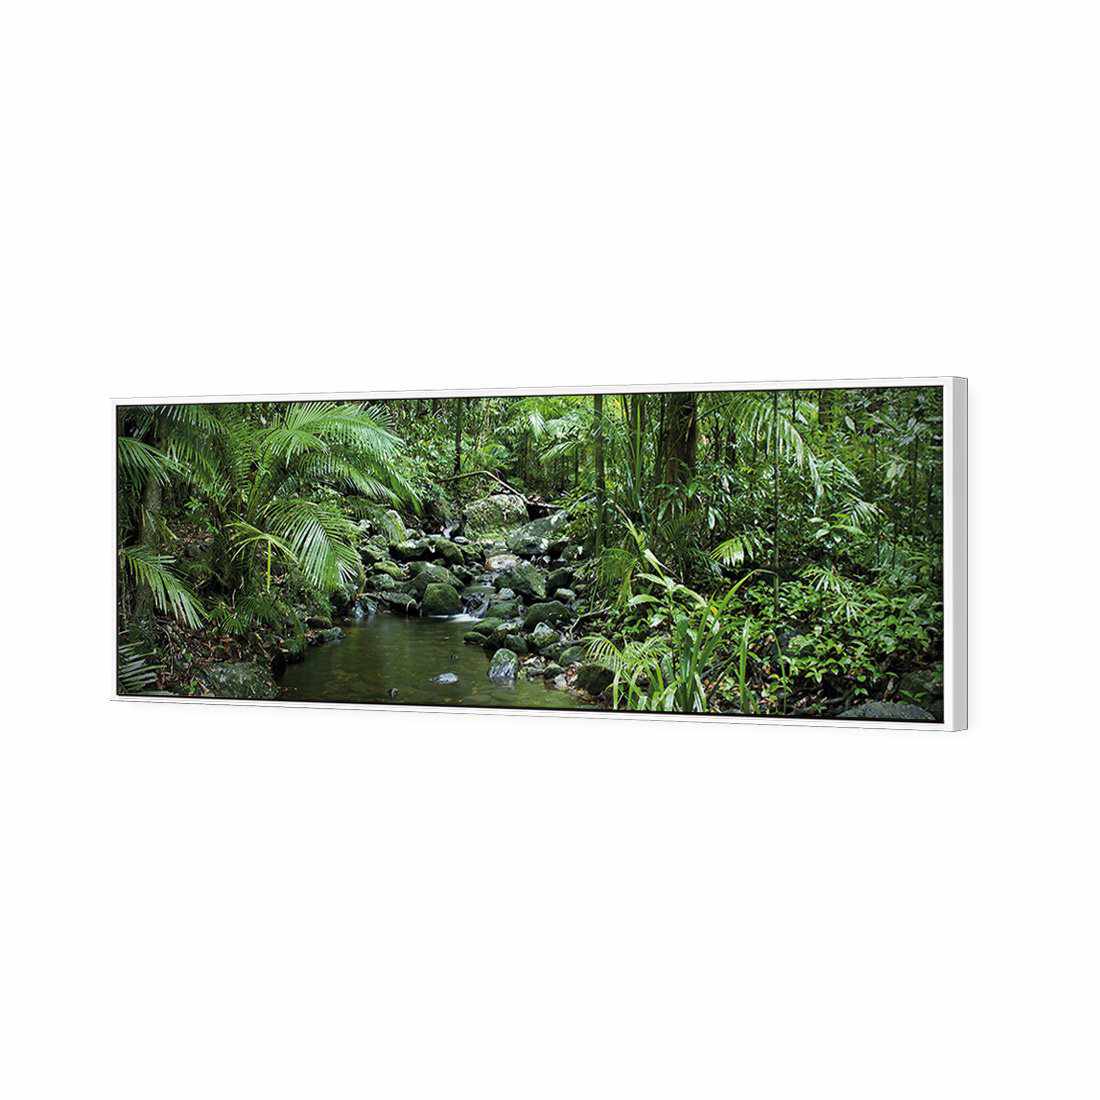 Mossman River In Daintree Rainforest Canvas Art-Canvas-Wall Art Designs-60x20cm-Canvas - White Frame-Wall Art Designs